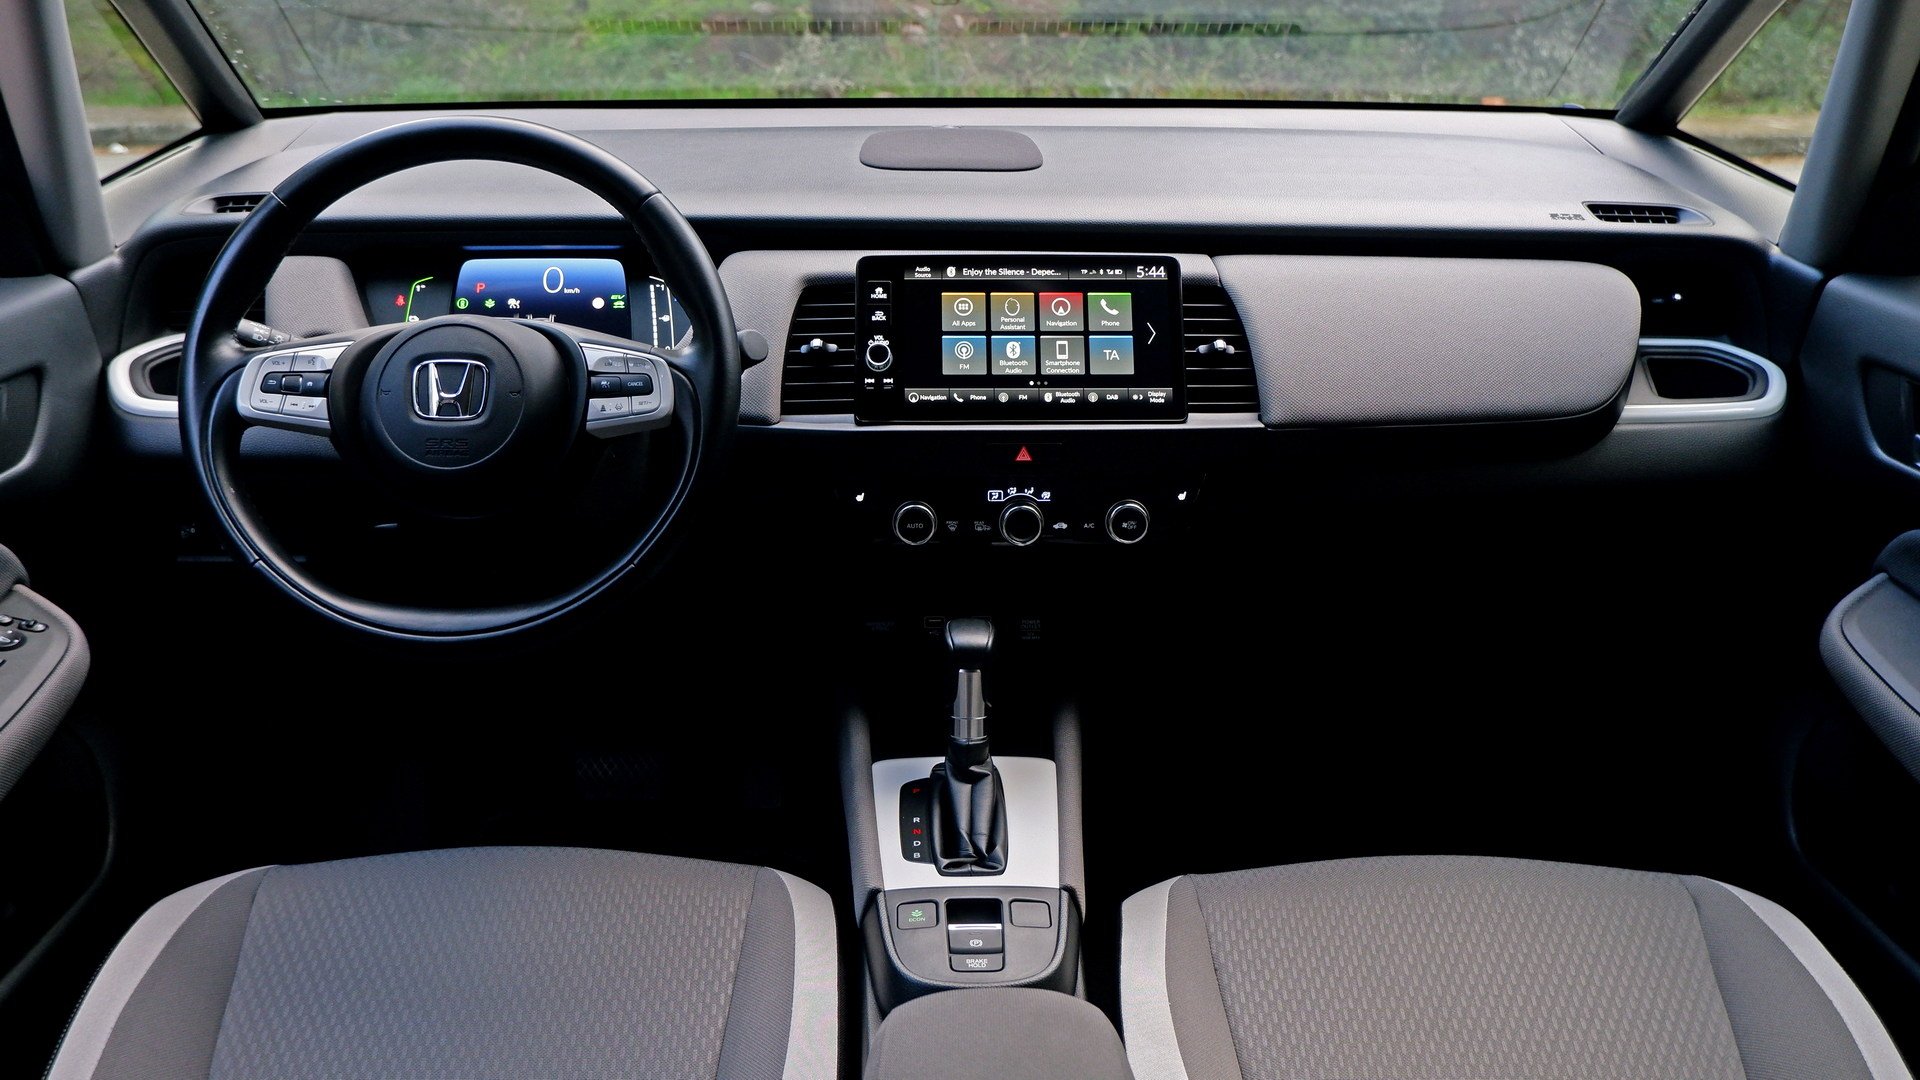 Honda Fit interior - Cockpit